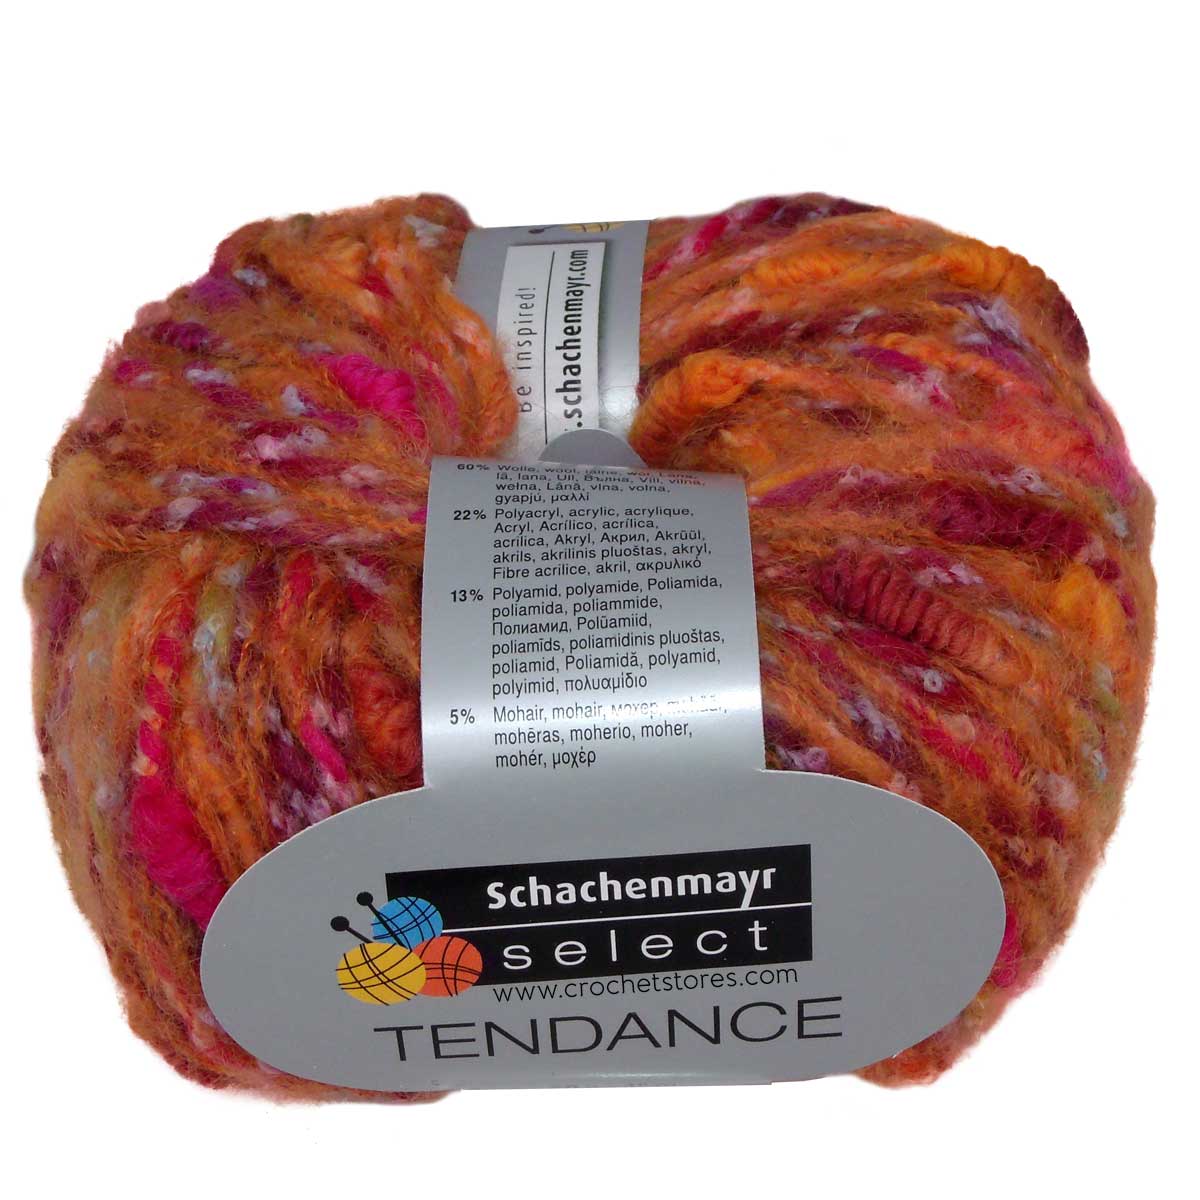 TENDANCE - Crochetstores9811763-83234082700933884